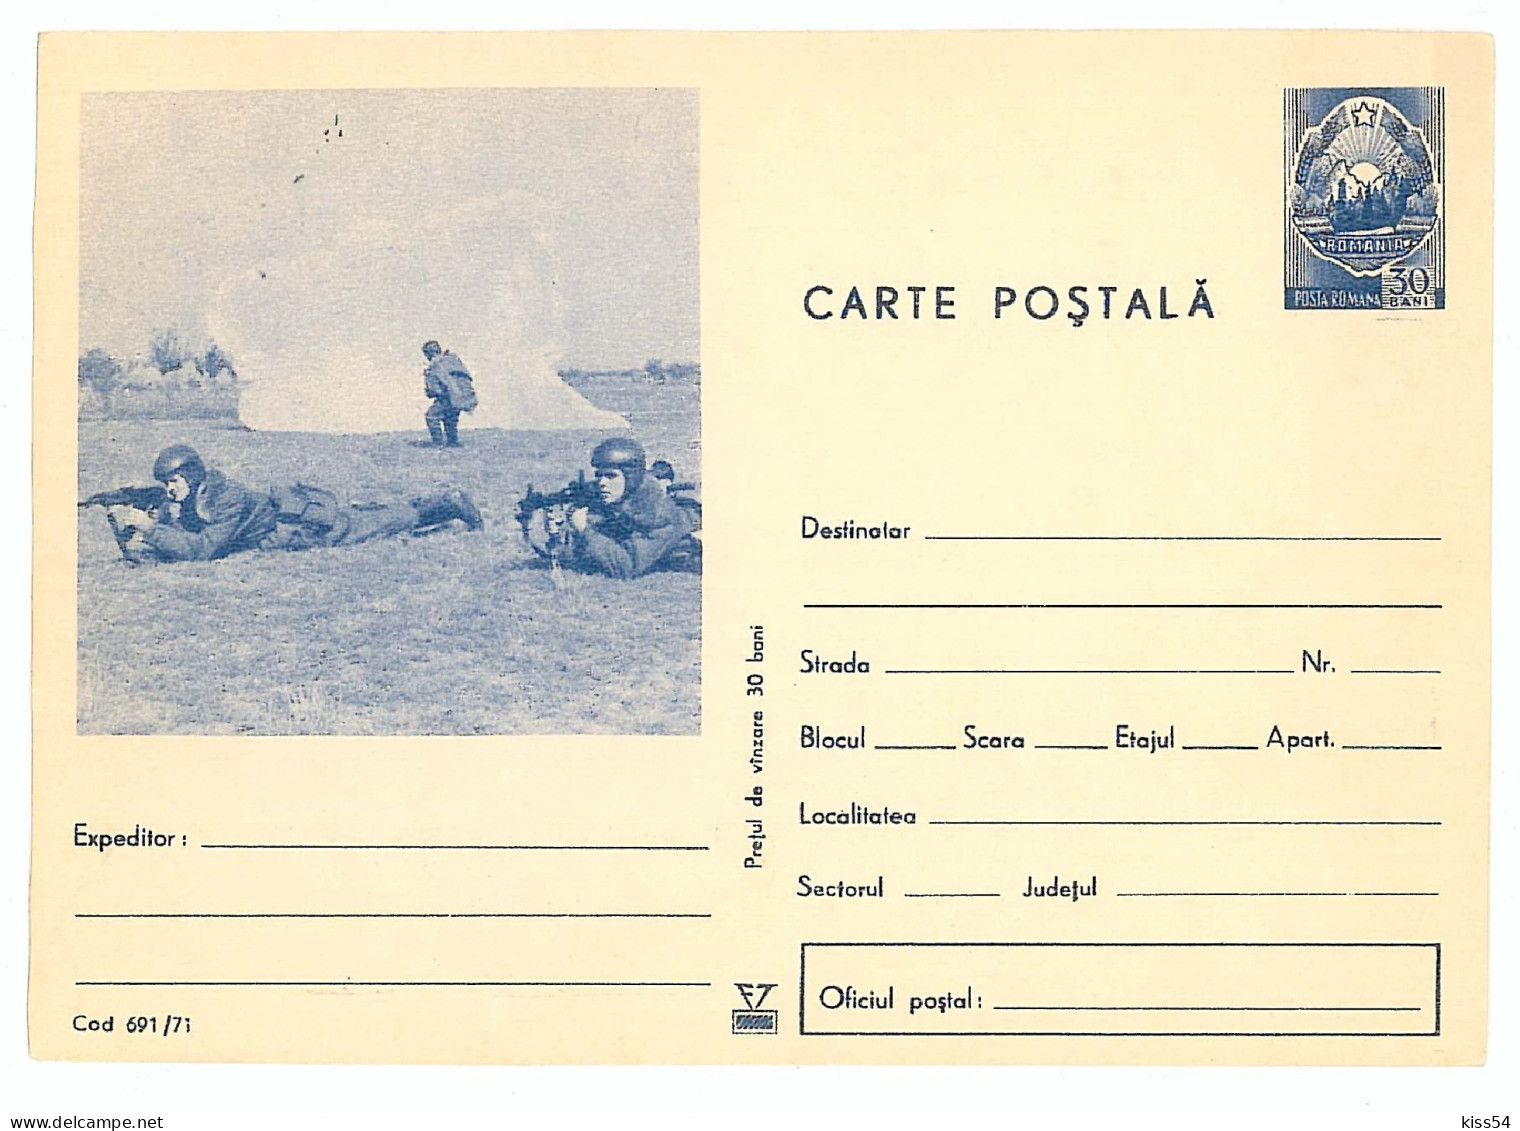 IP 71 - 691f Military Parachute - Stationery - Unused - 1971 - Postal Stationery